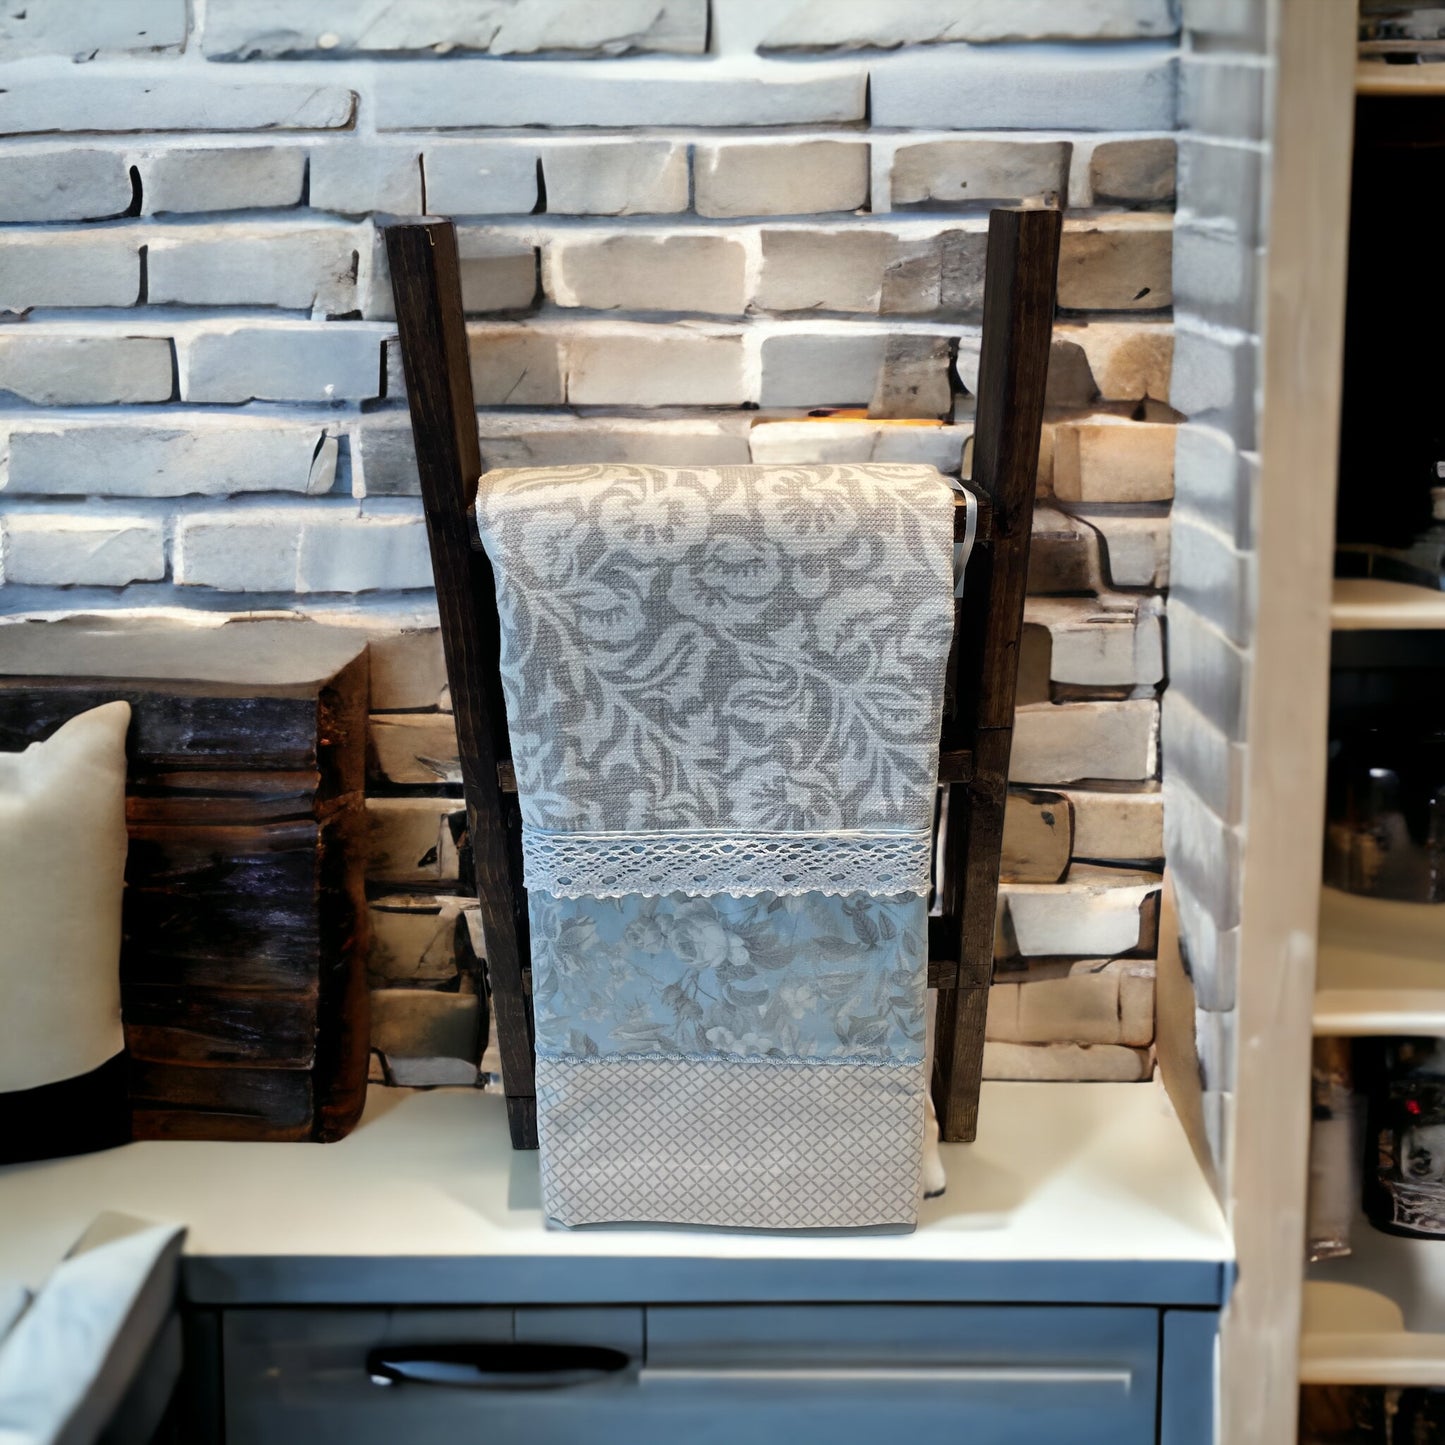 Blue & Grey Floral Kitchen Towel with Handcrafted Quilt Cotton & Lace Trim Details